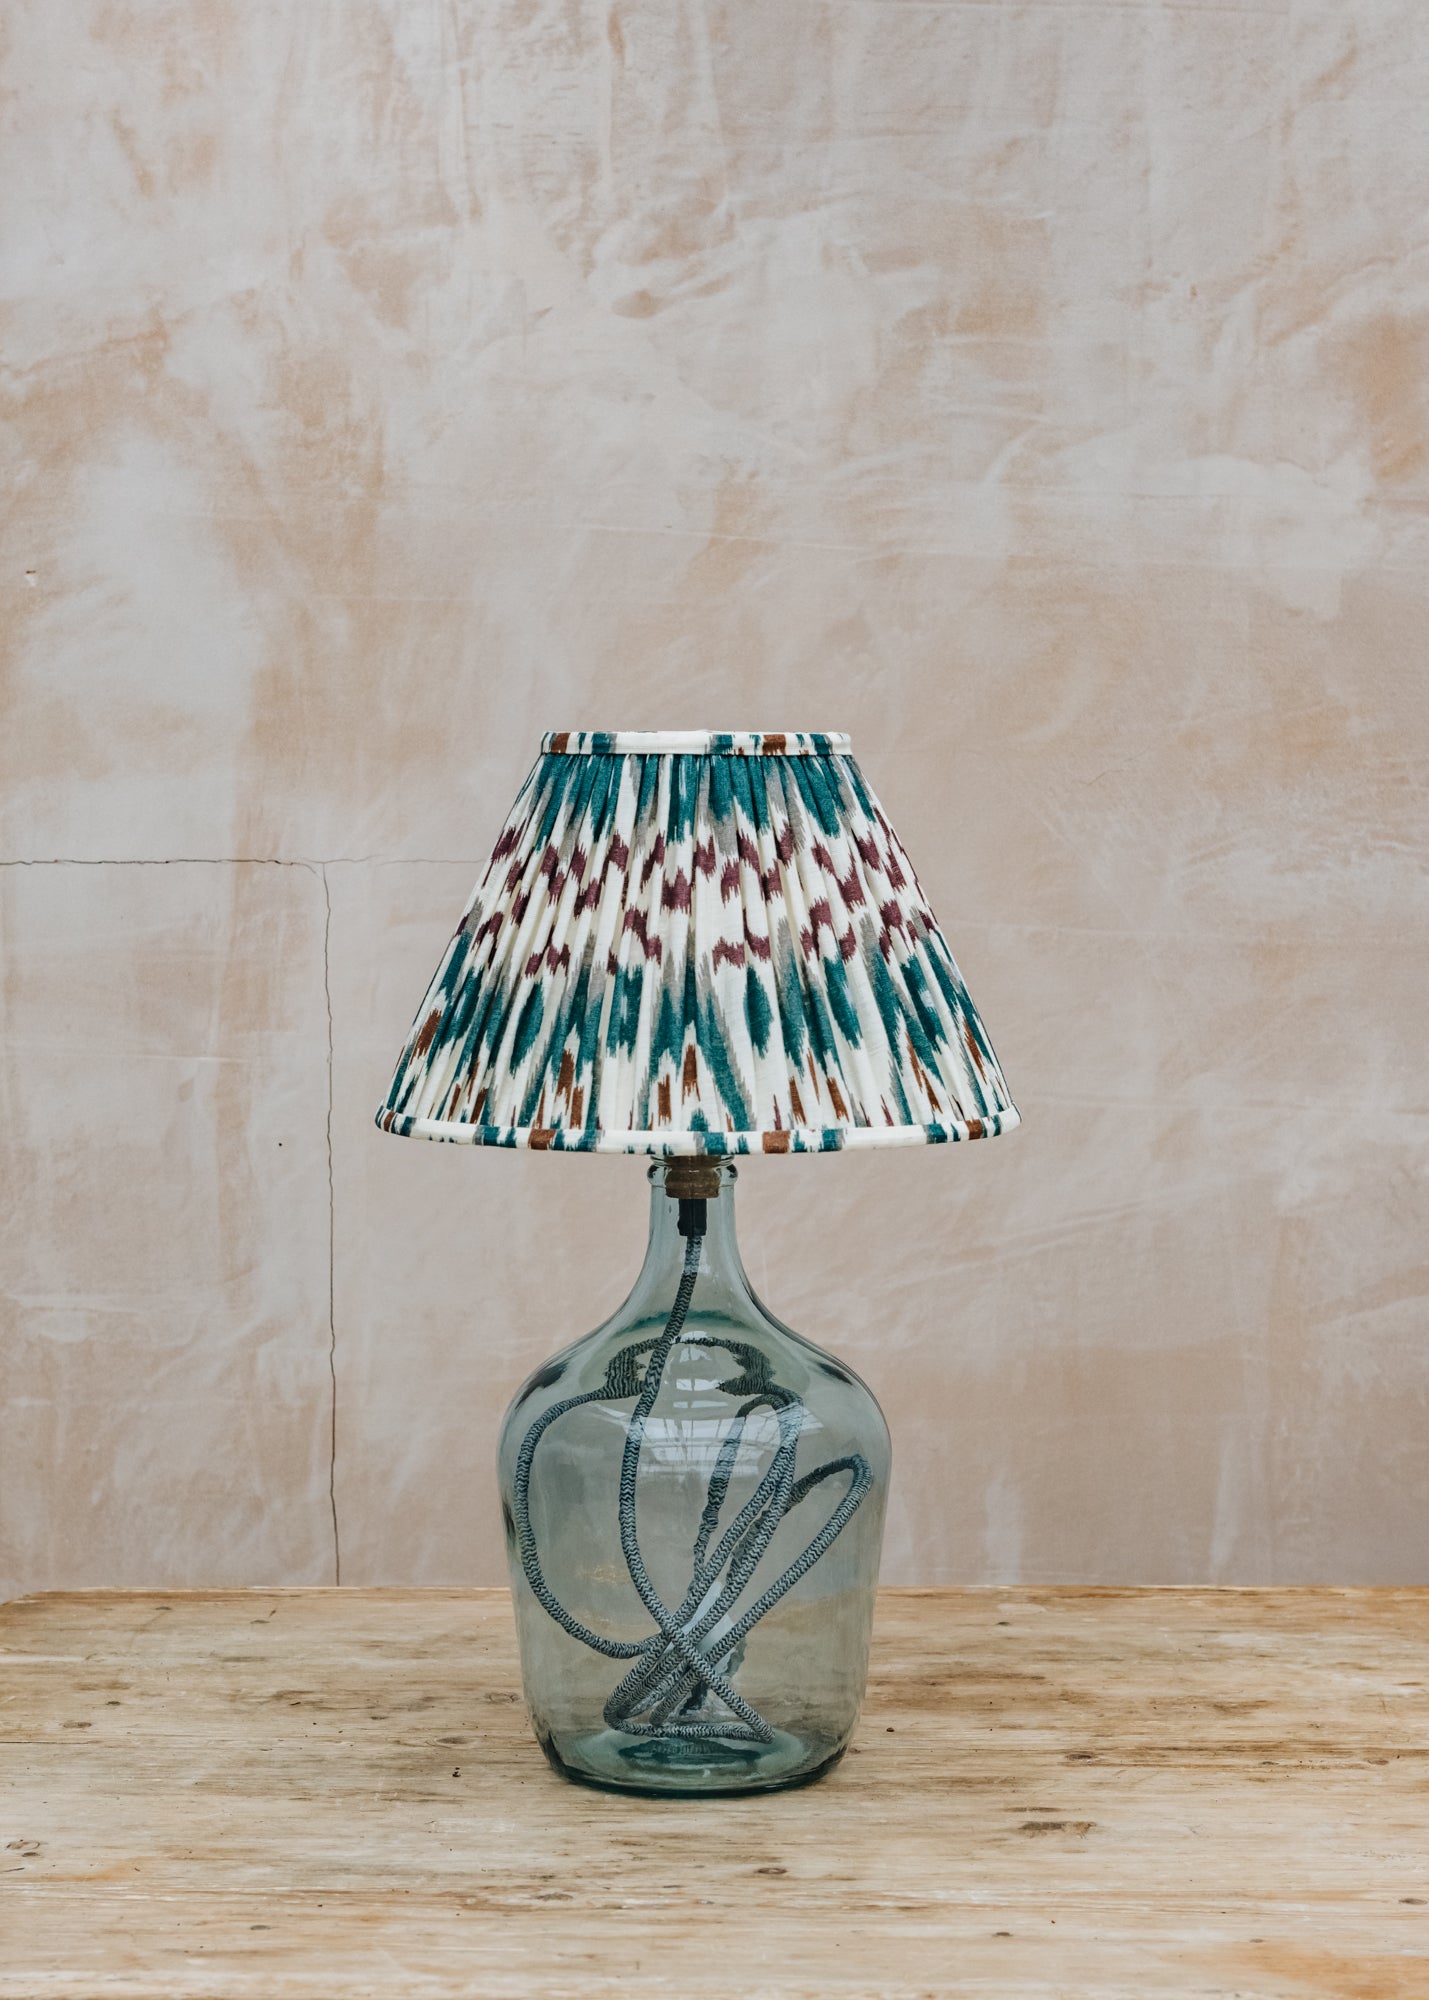 Garrafa Bottle Lamp in Light Blue